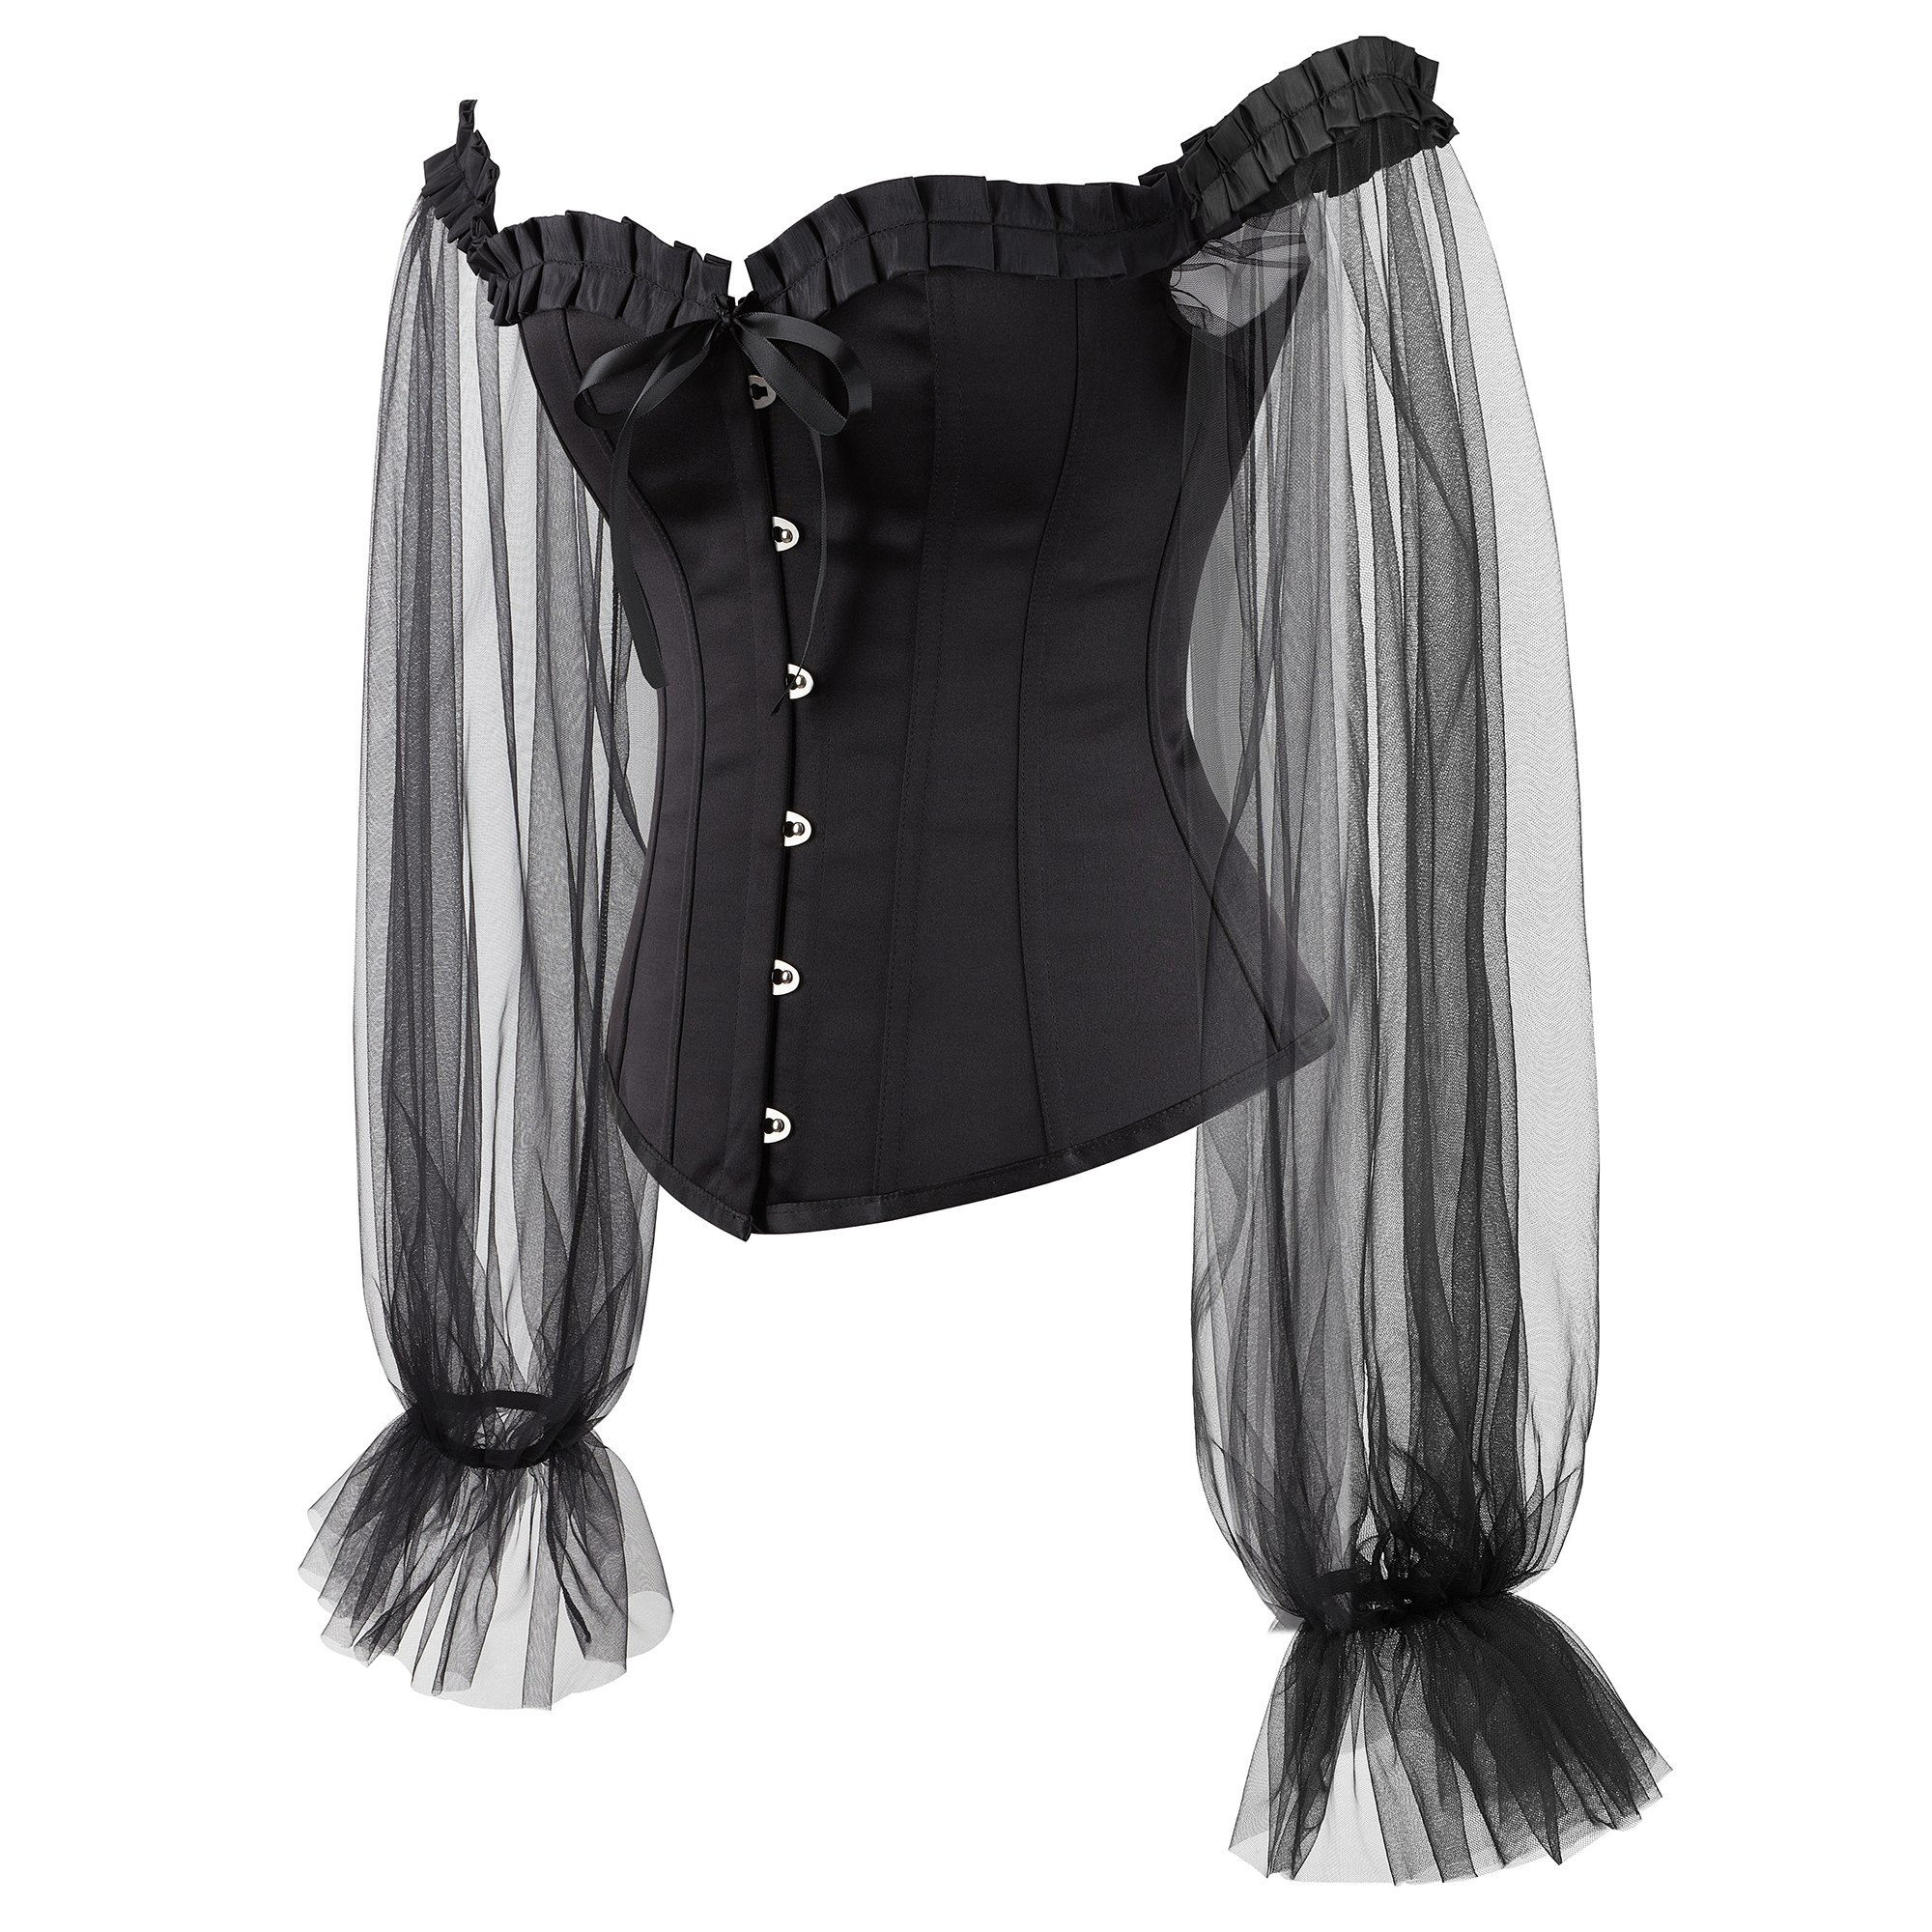 ASYOU long sleeve mesh corset top in black